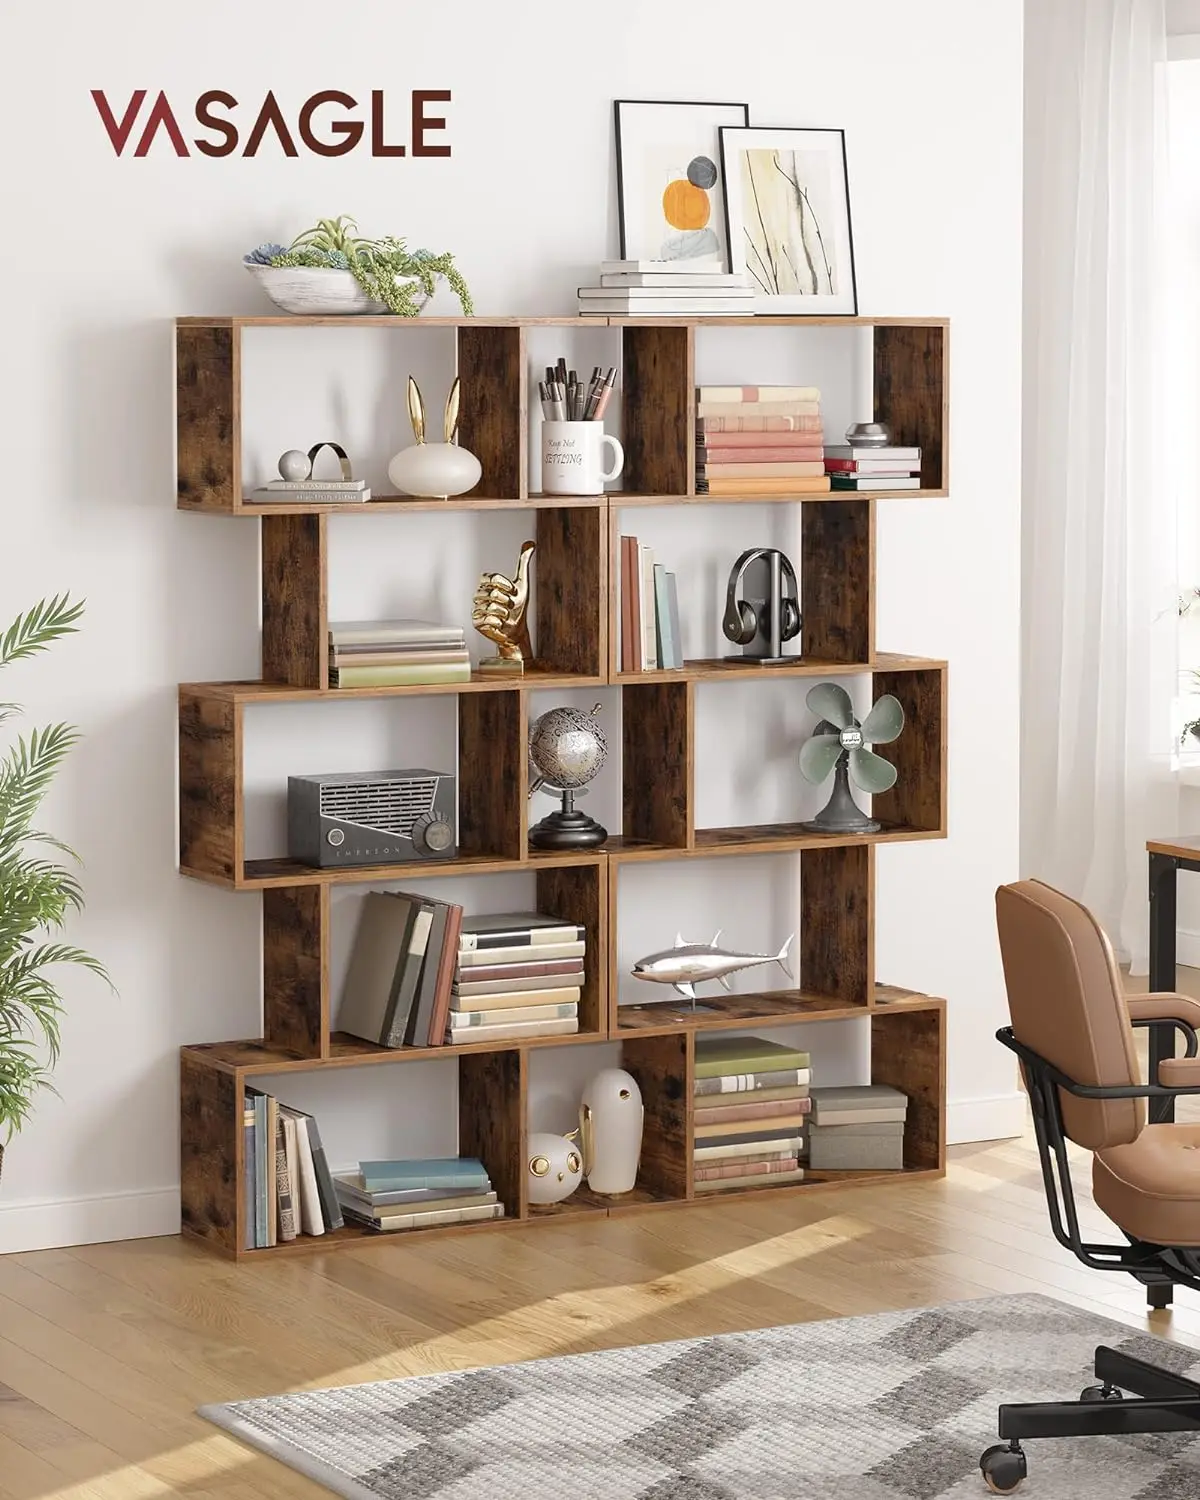 

Bookcase, 5-Tier Bookshelf, Display Shelf and Room Divider, Freestanding Decorative Storage Shelving,